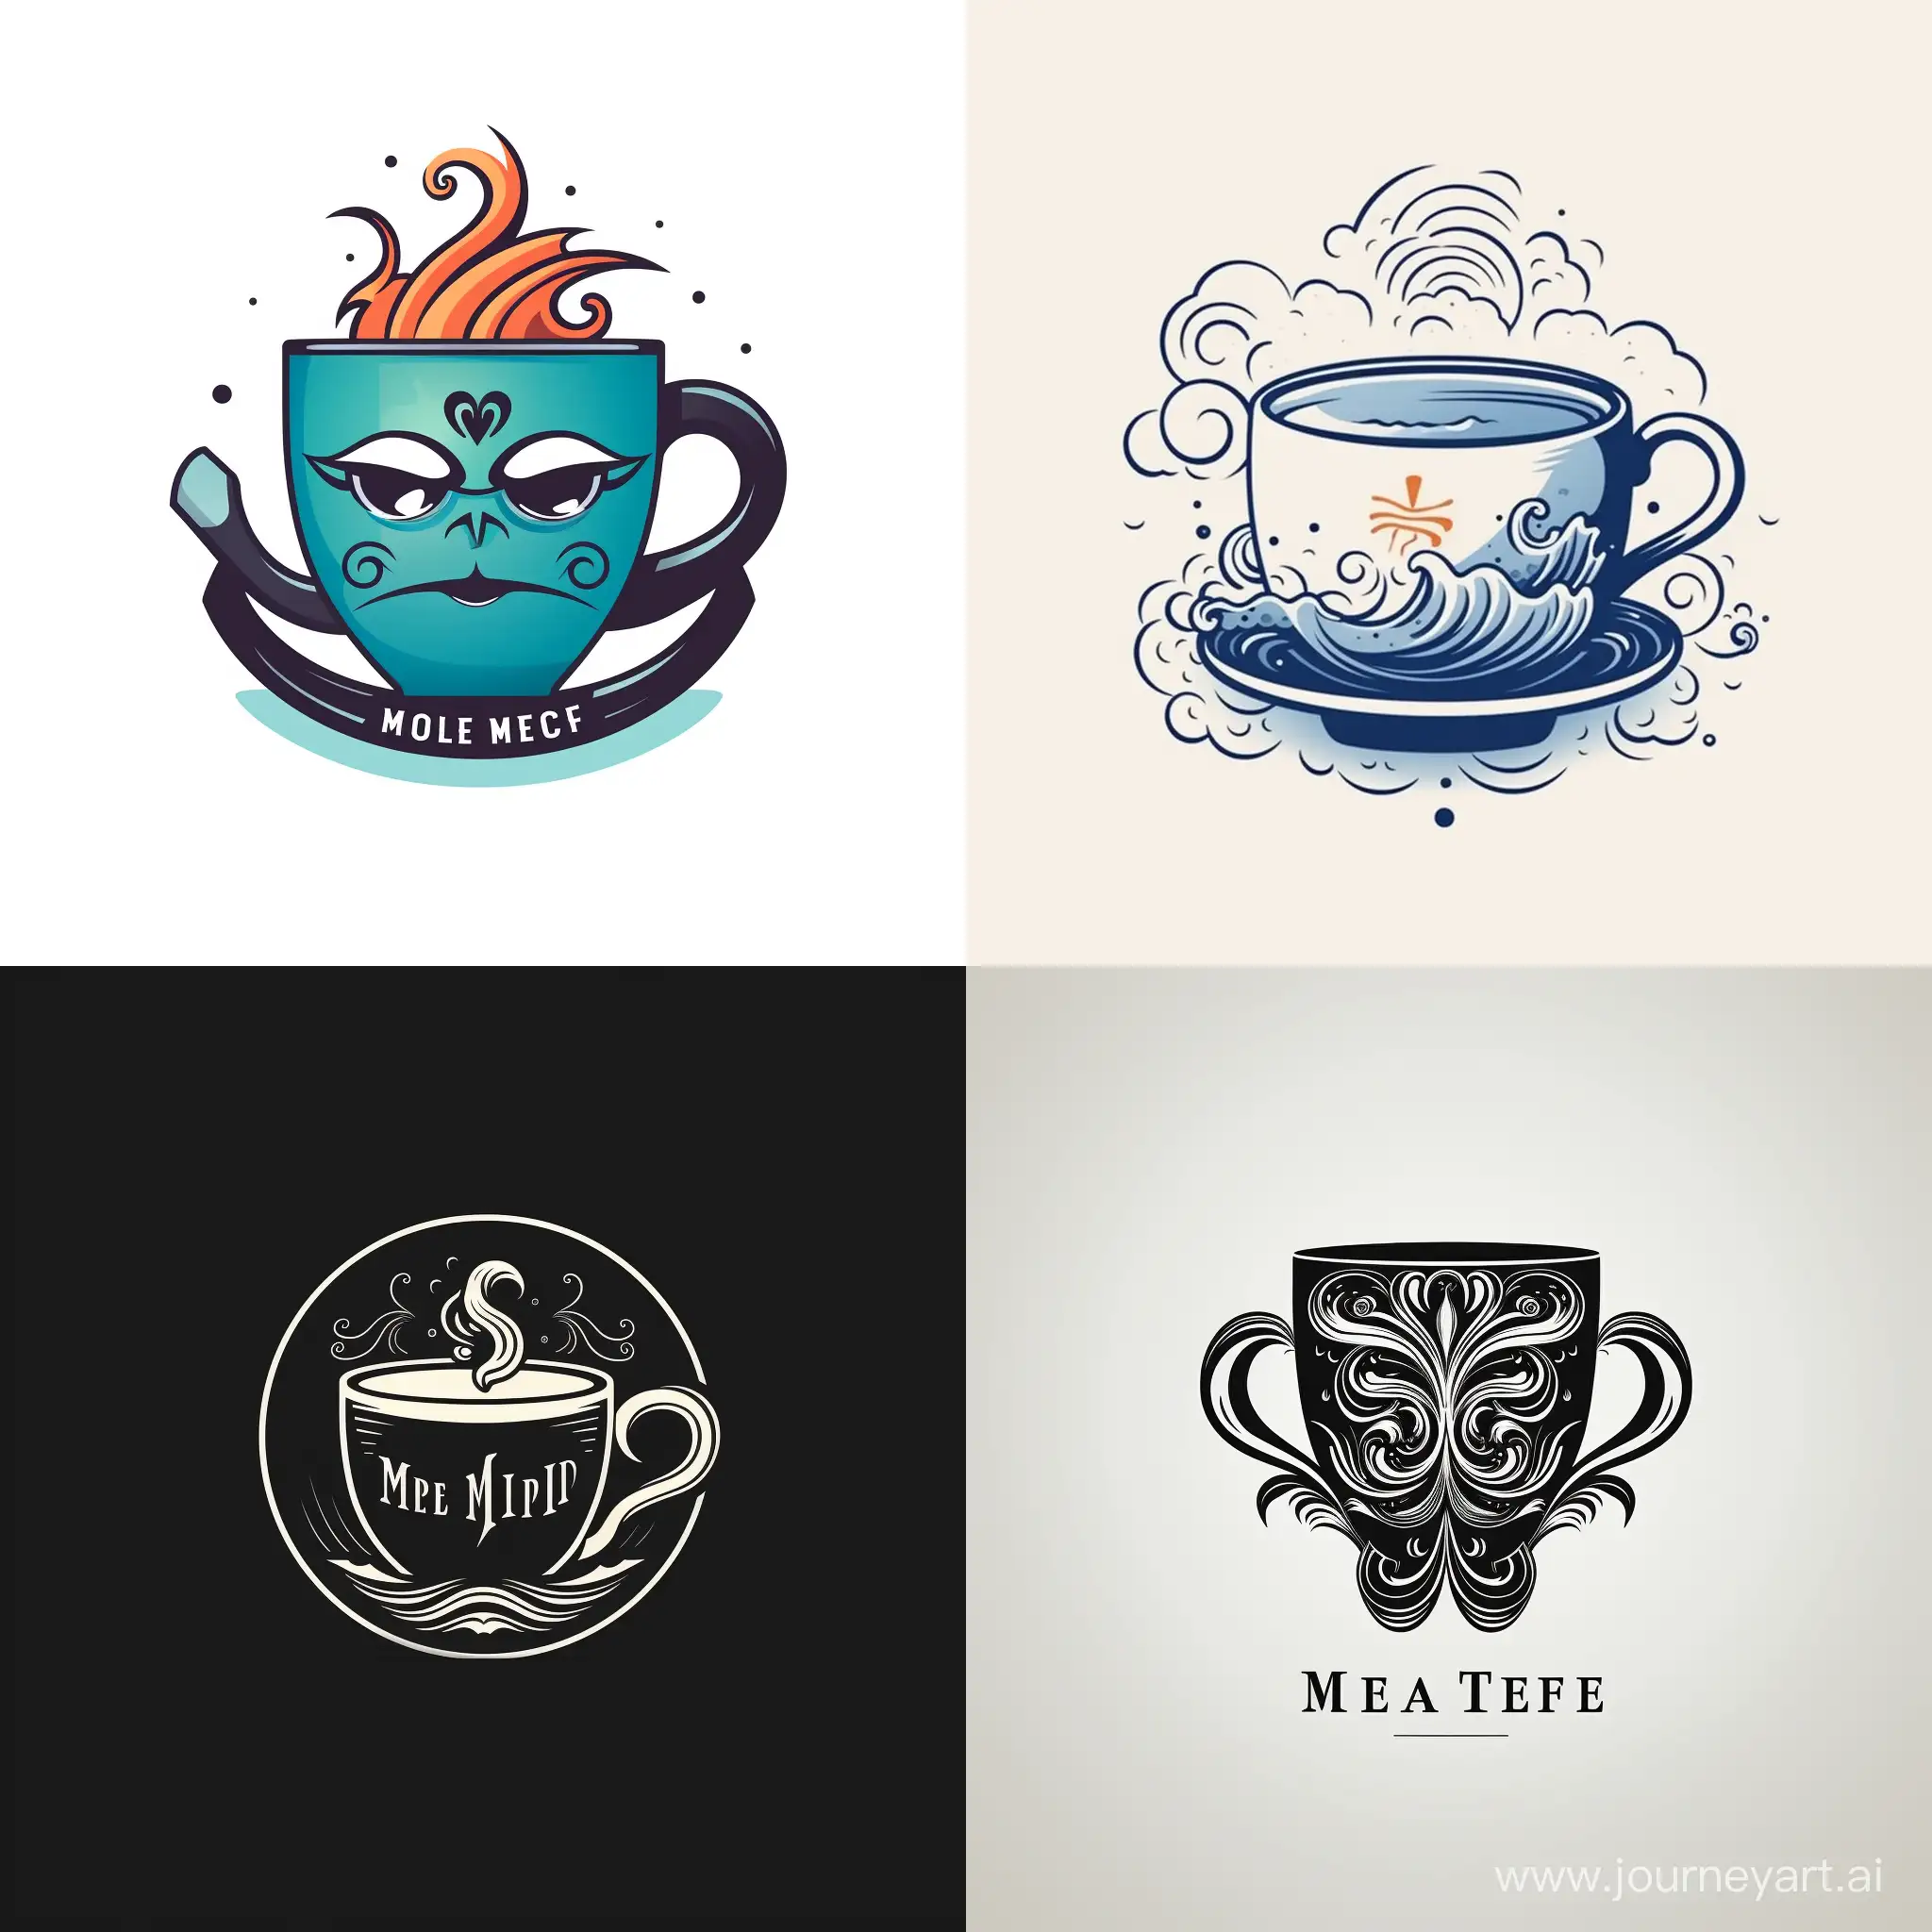 Creative-Coffee-Cup-Logo-Design-with-Aspect-Ratio-11